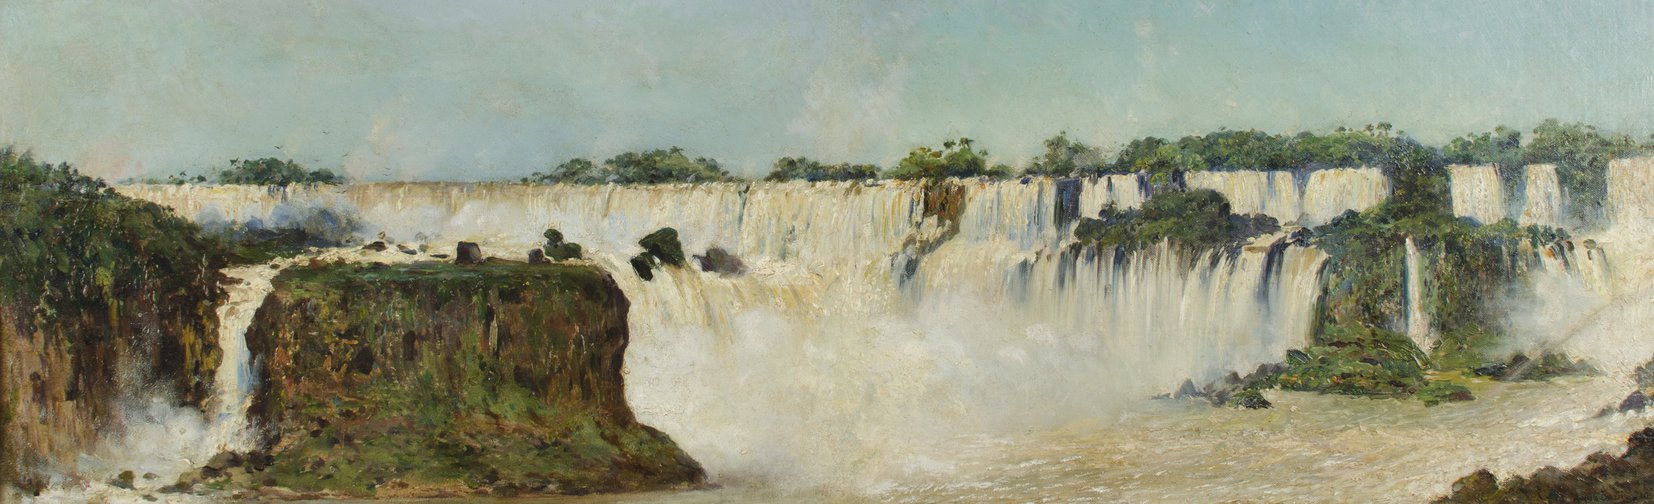 La cascada del Iguazú